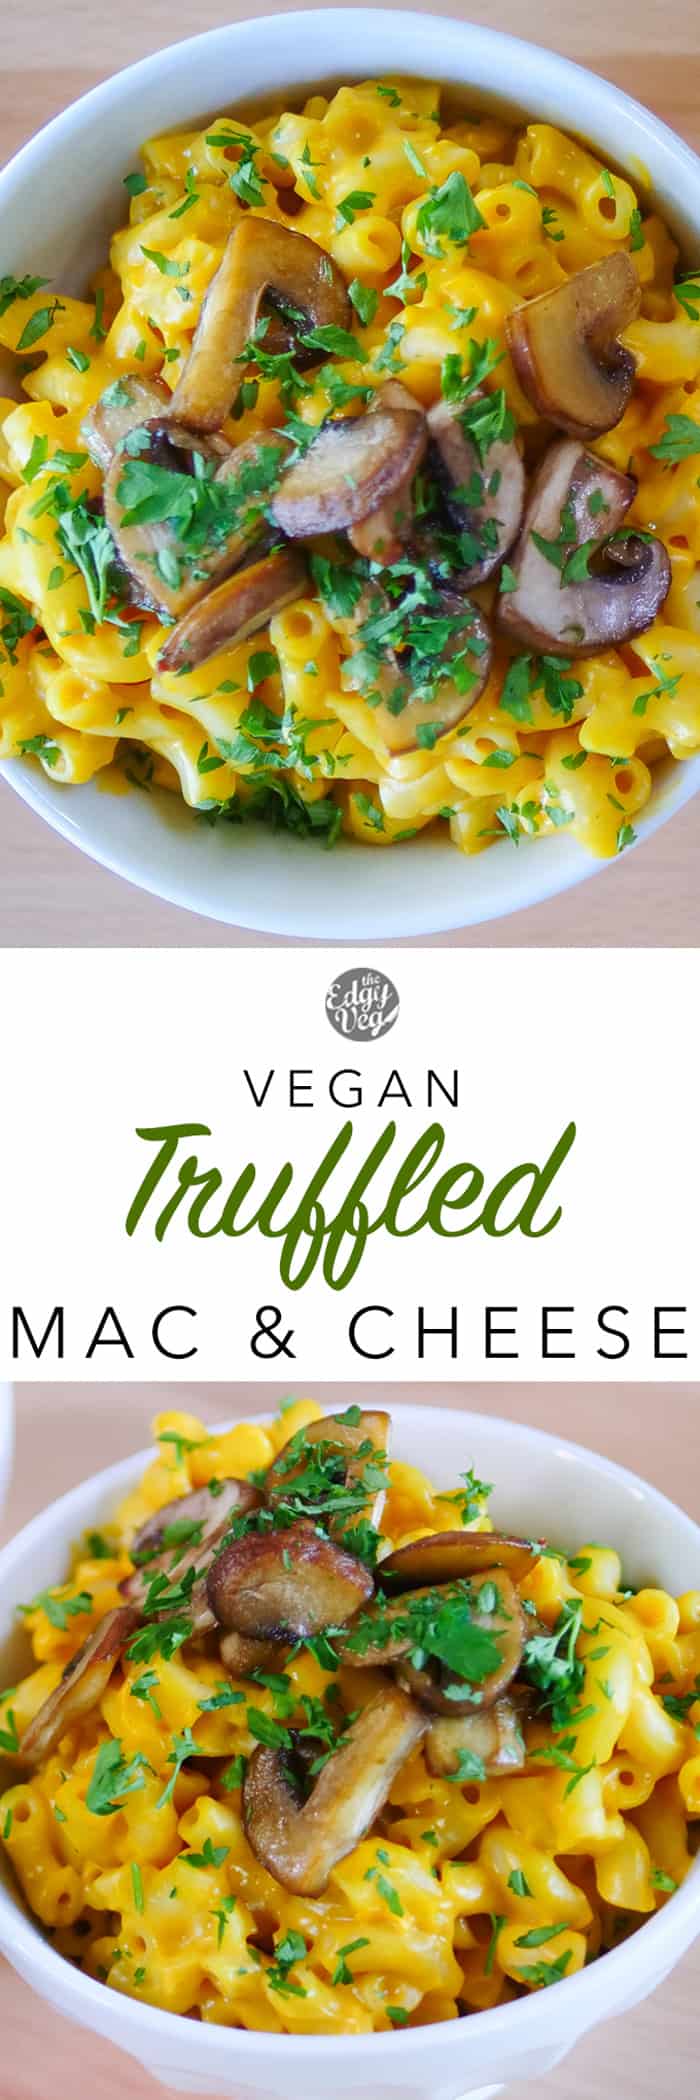 Vegan Truffle Mac & Cheese Recipe